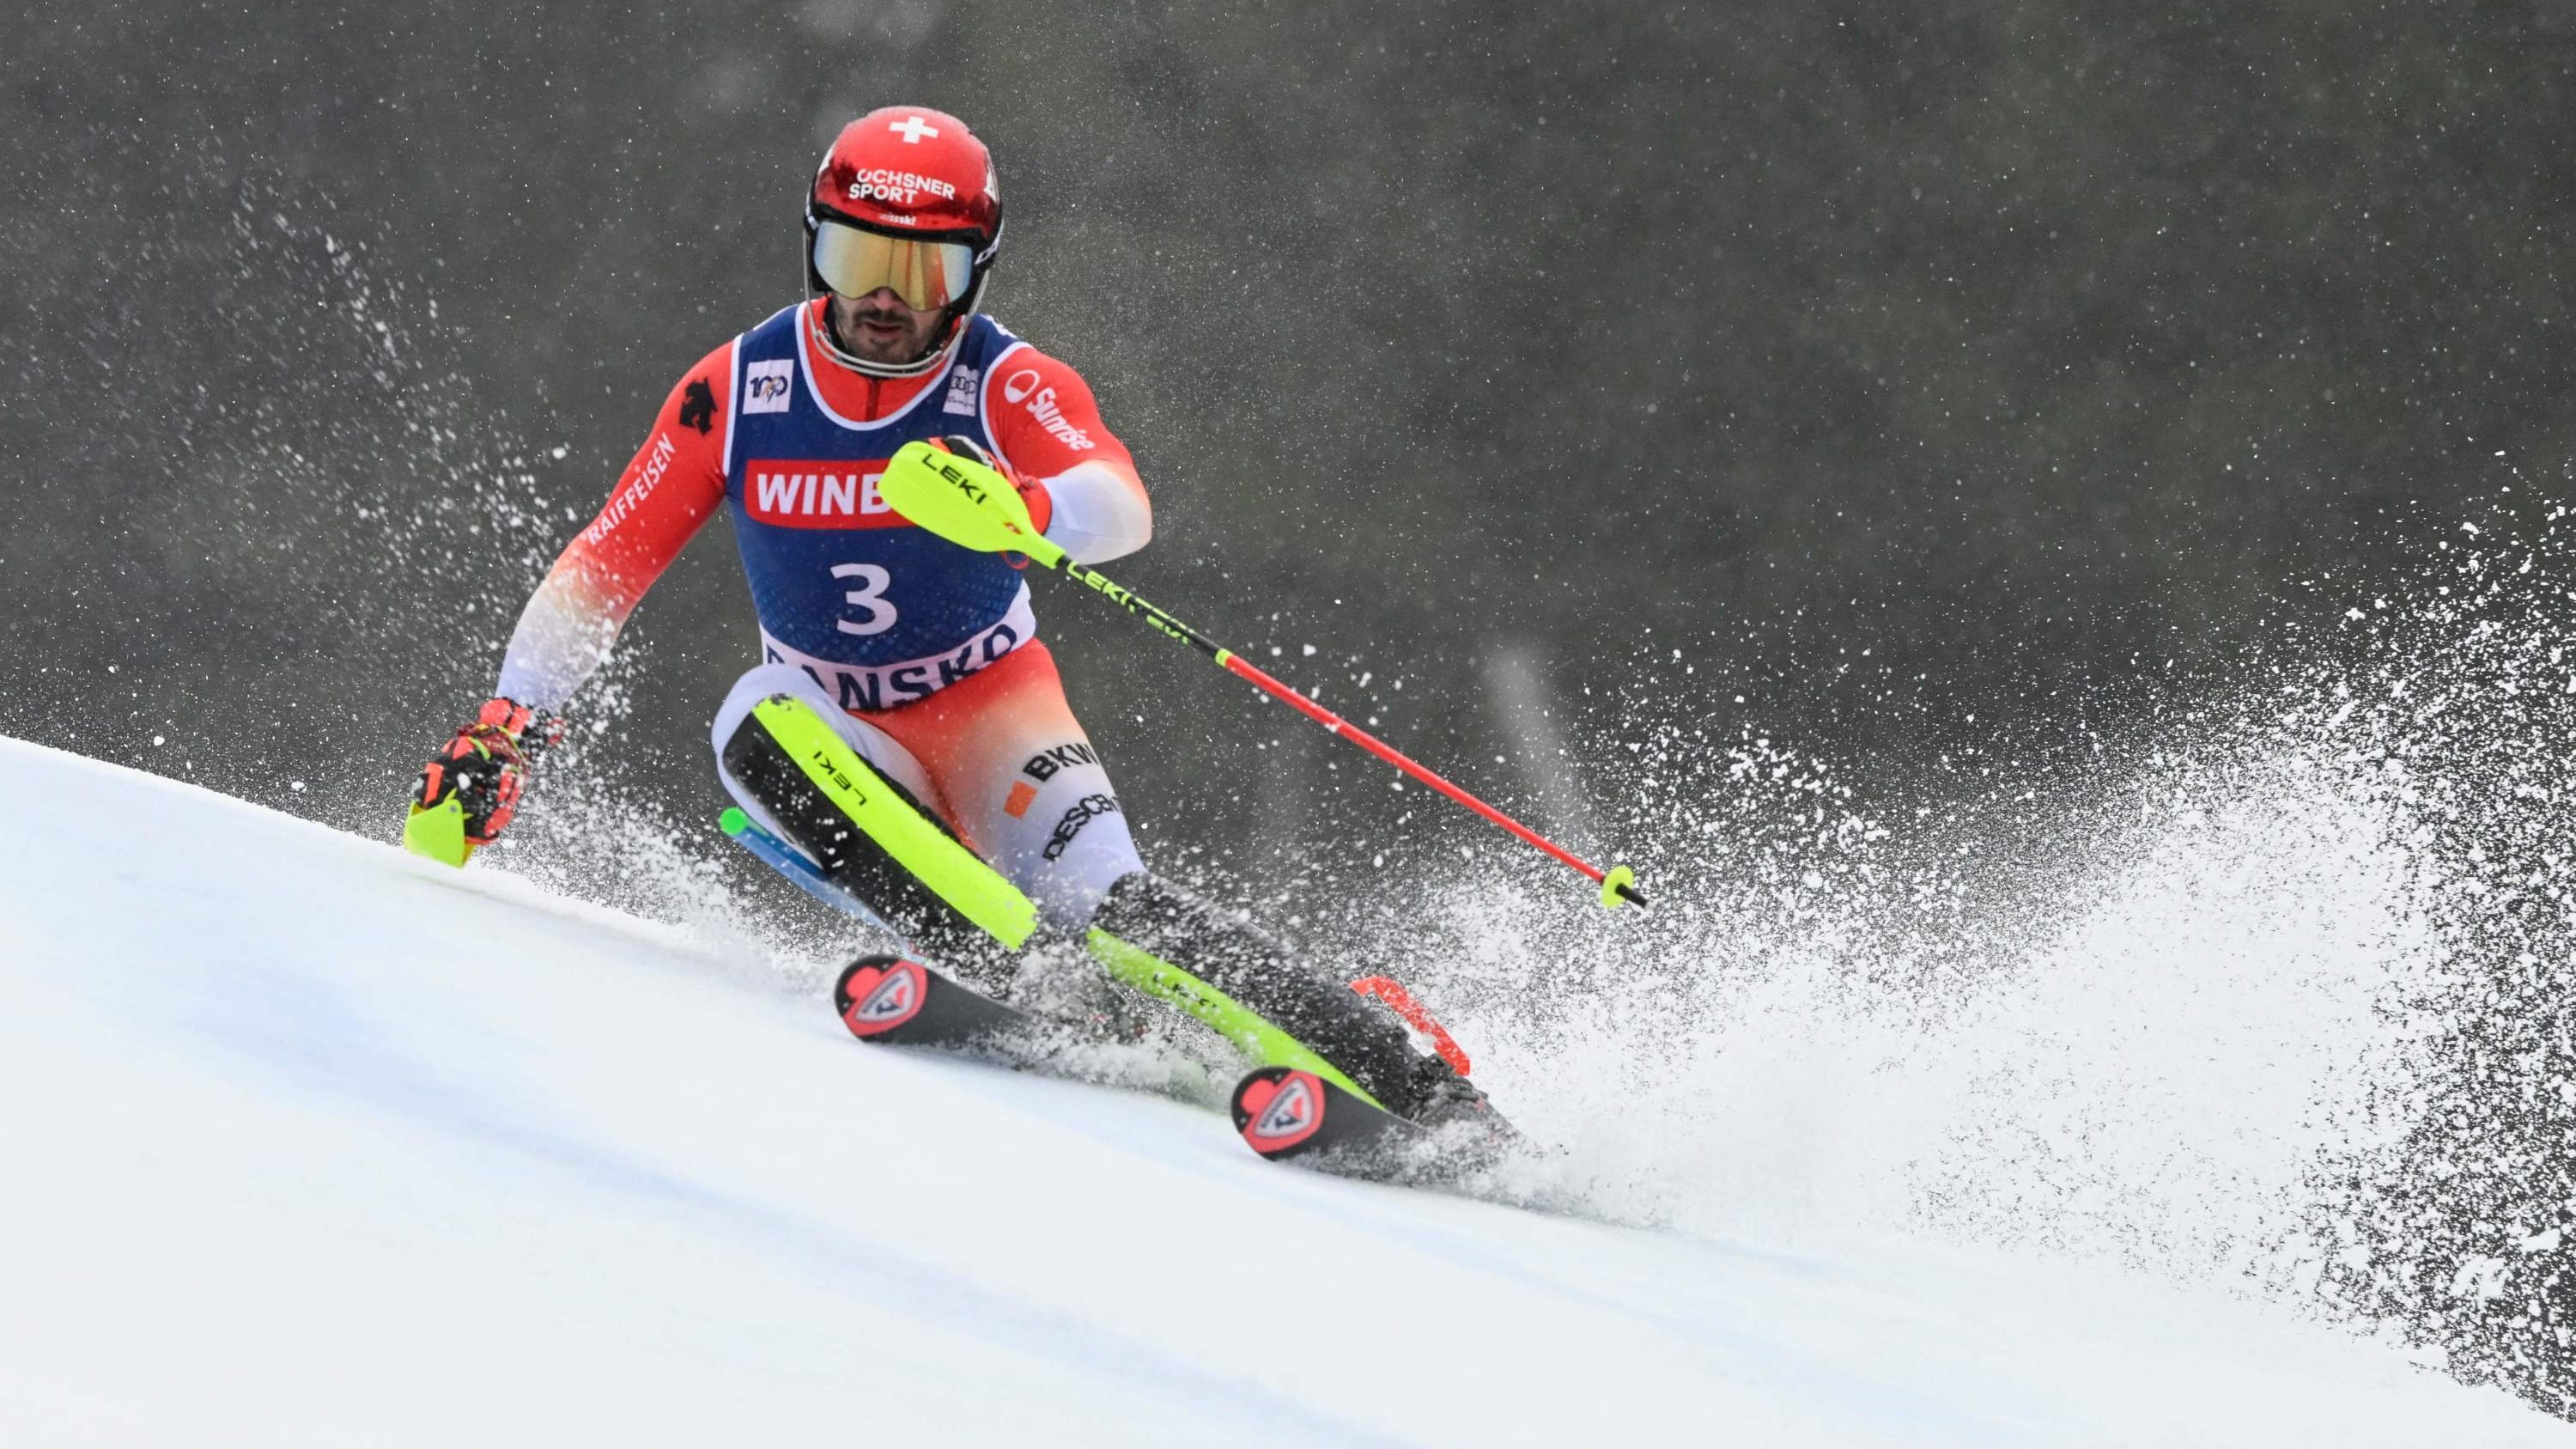 Ski alpin : Meillard remporte le slalom d'Aspen, Noël sort dans la seconde manche